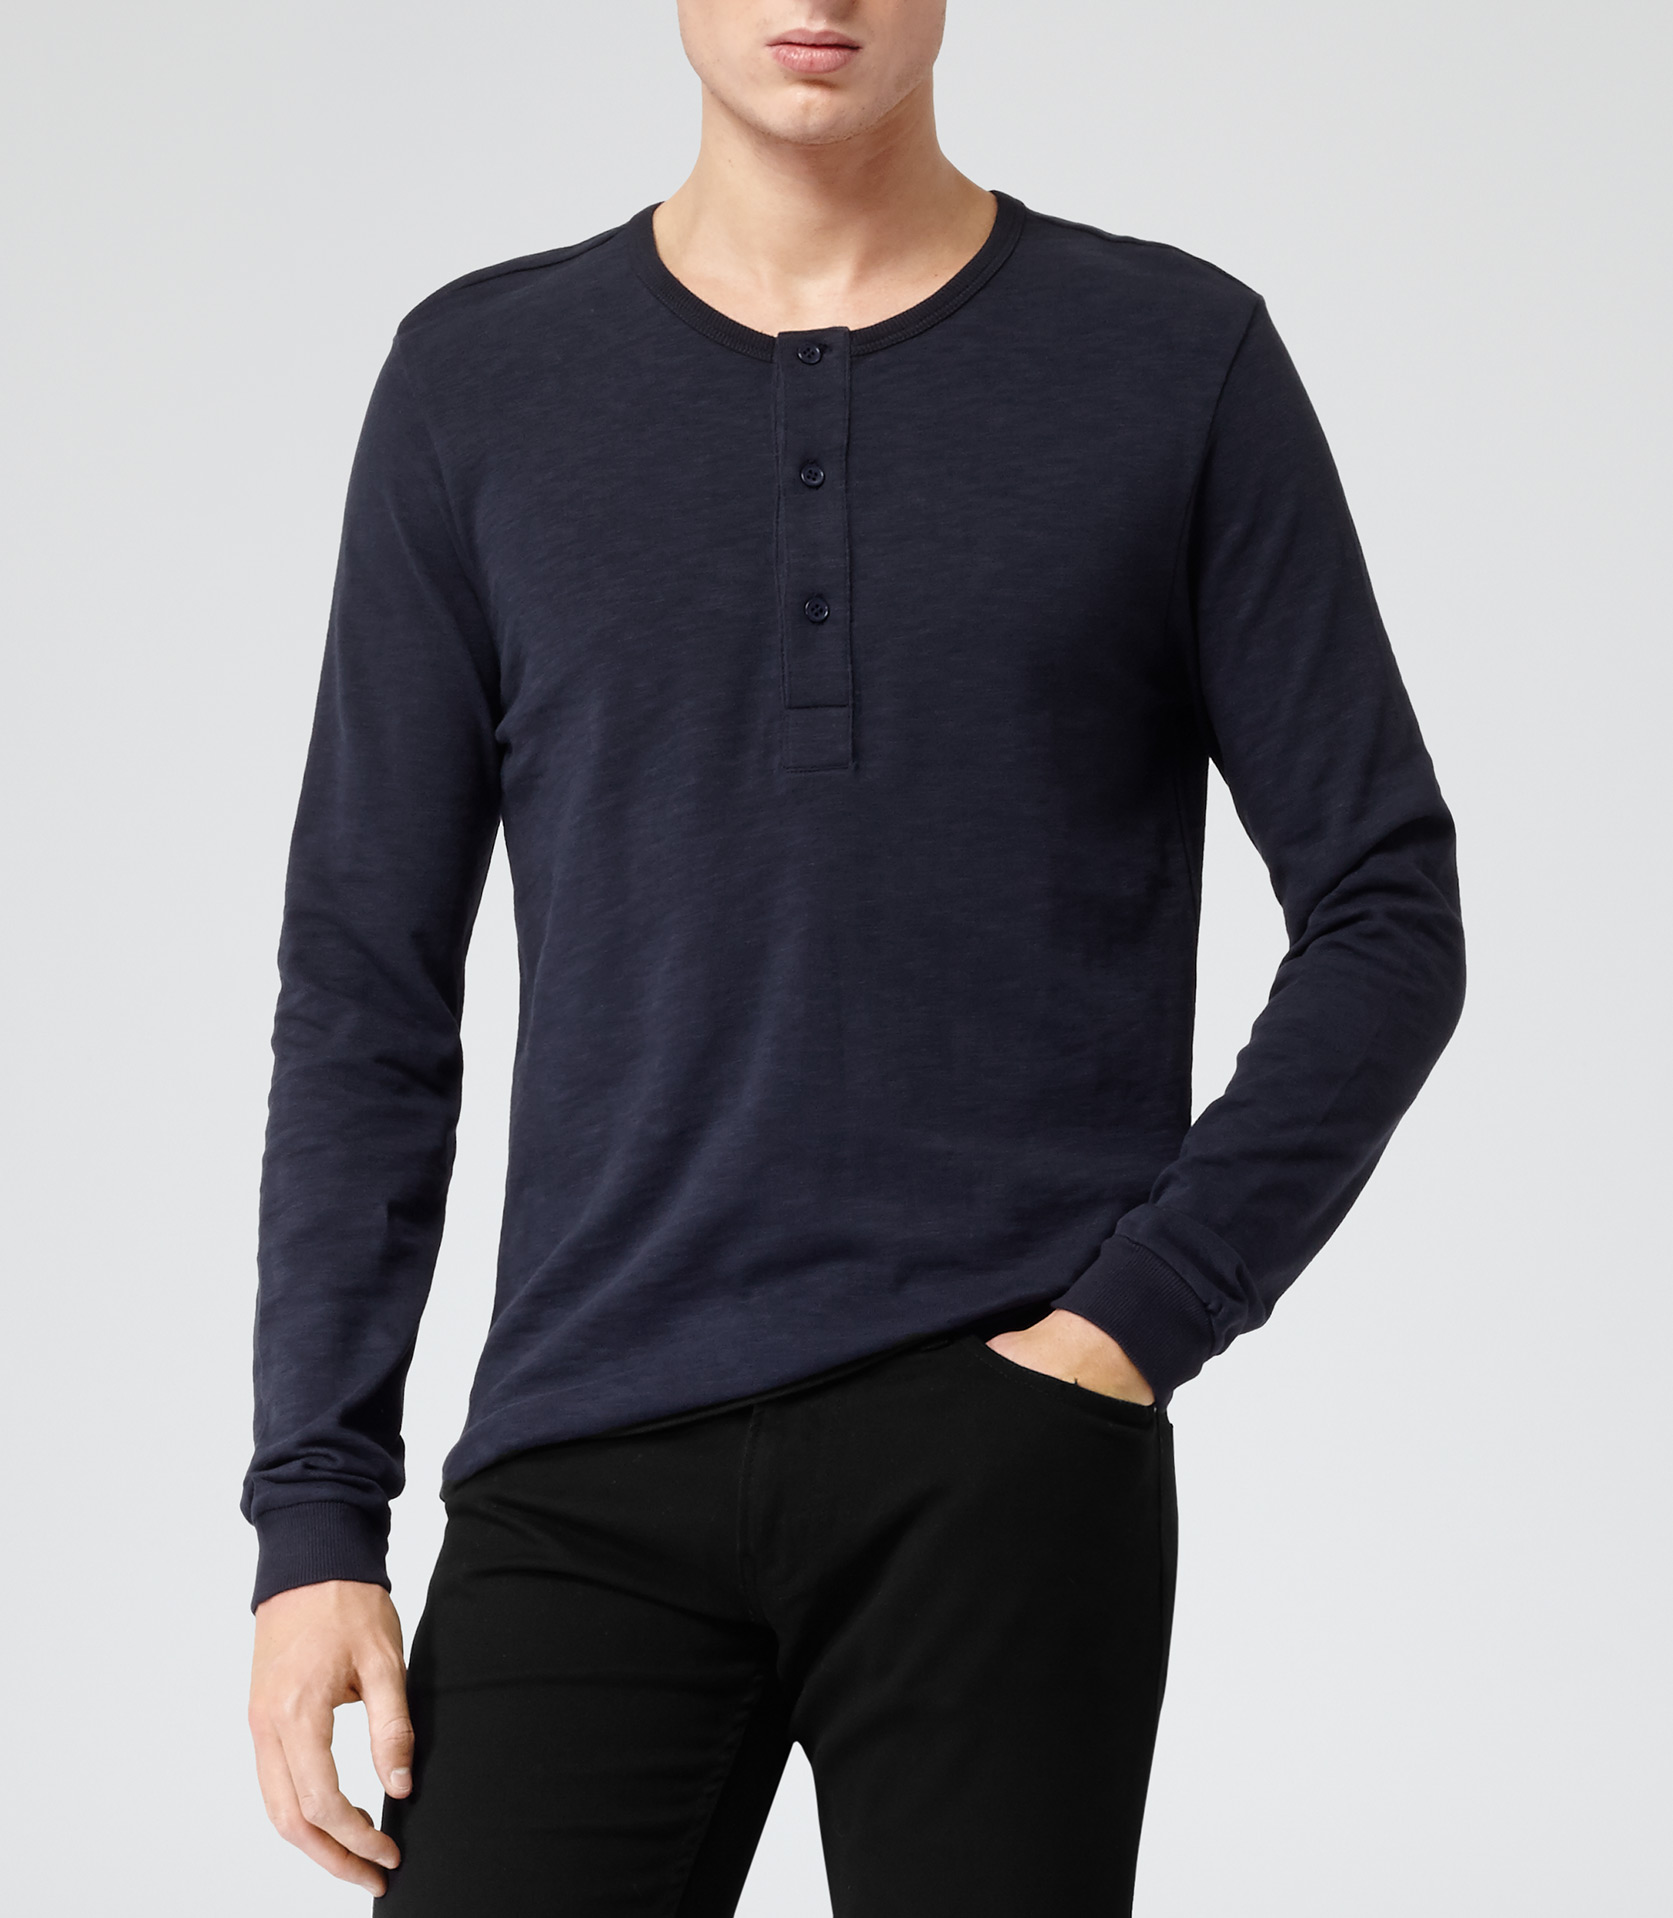 Lyst - Reiss Lex Long Sleeve Henley Shirt in Blue for Men